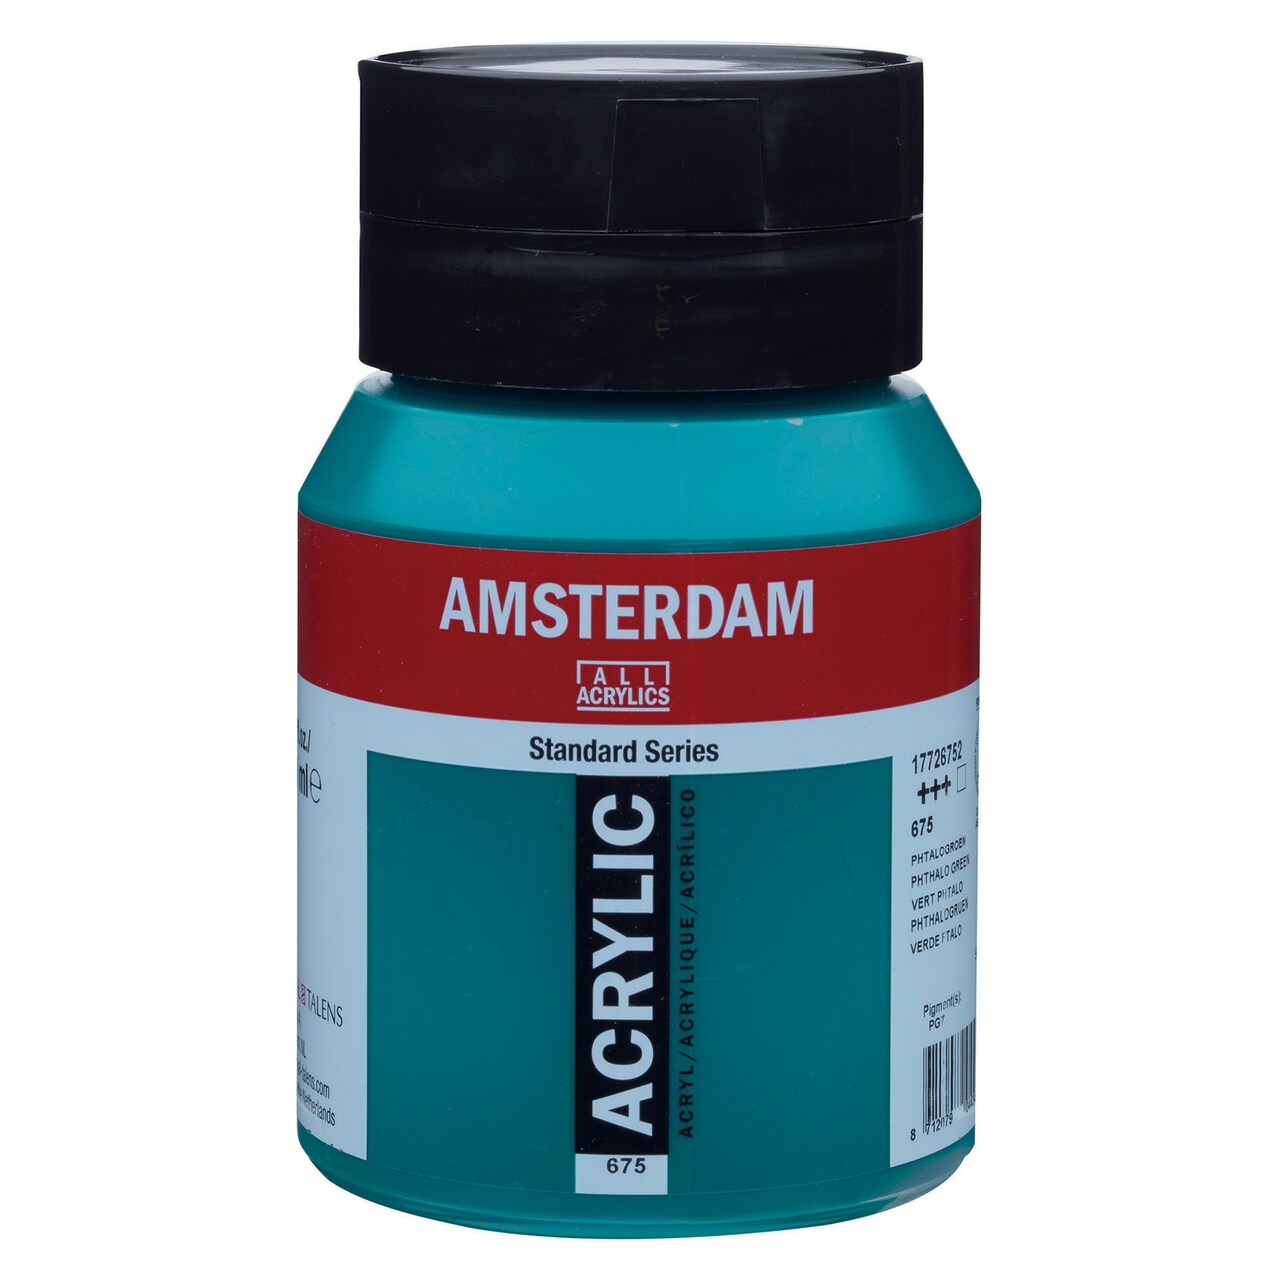 Amsterdam Standard Series Acrylic Paint, 500ml, Phthalo Green